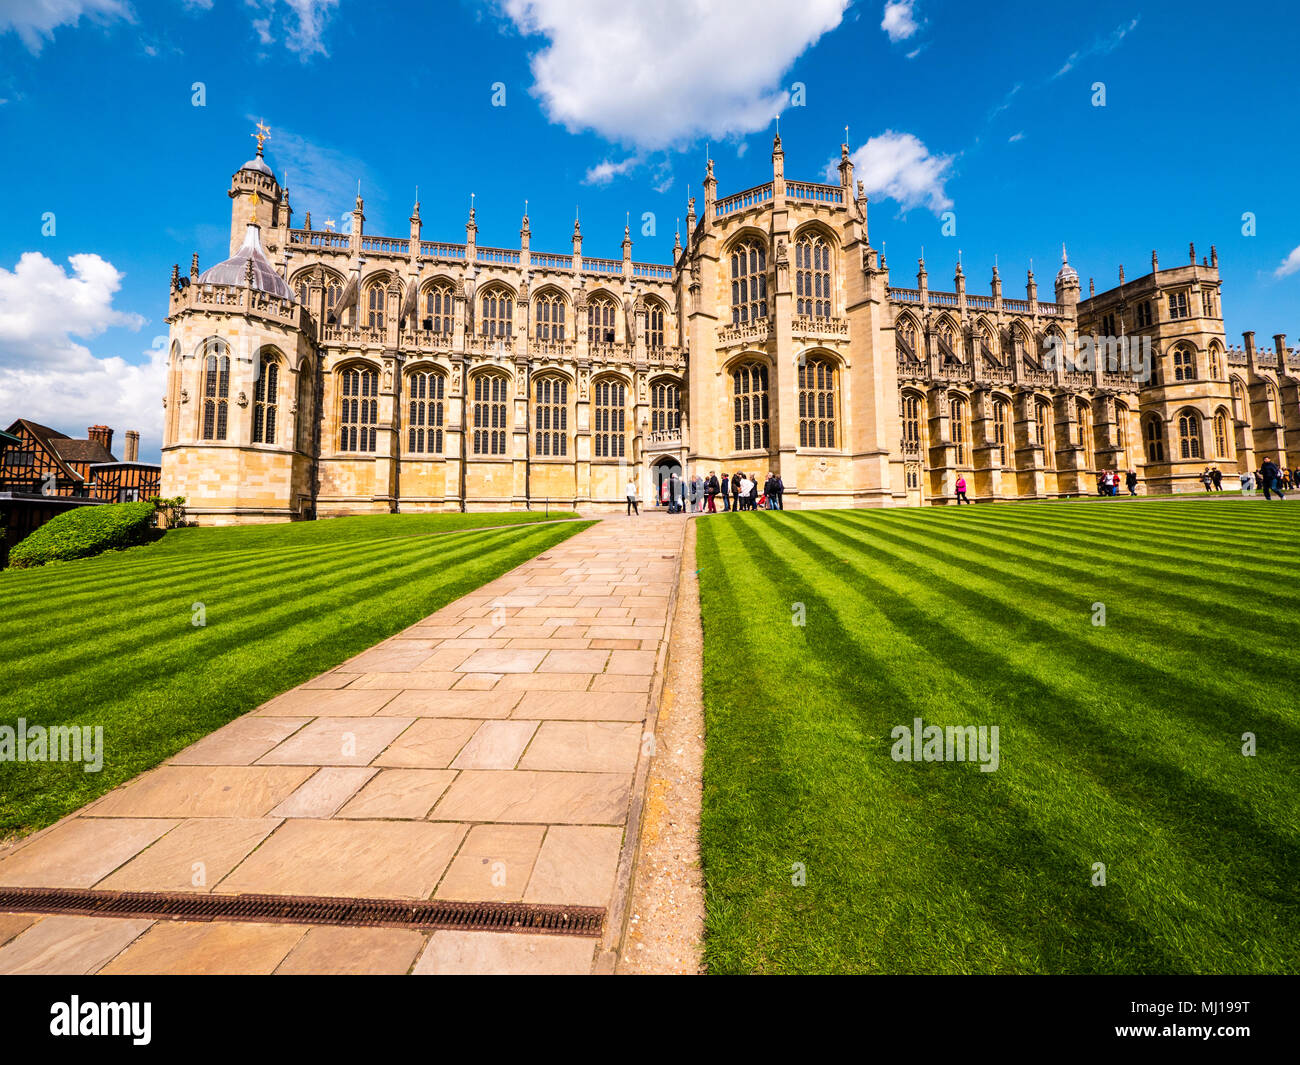 St Georges Chapel, location of Royal Wedding 2018, Windsor Castle, Windsor, Berkshire, England, UK, GB. Stock Photo